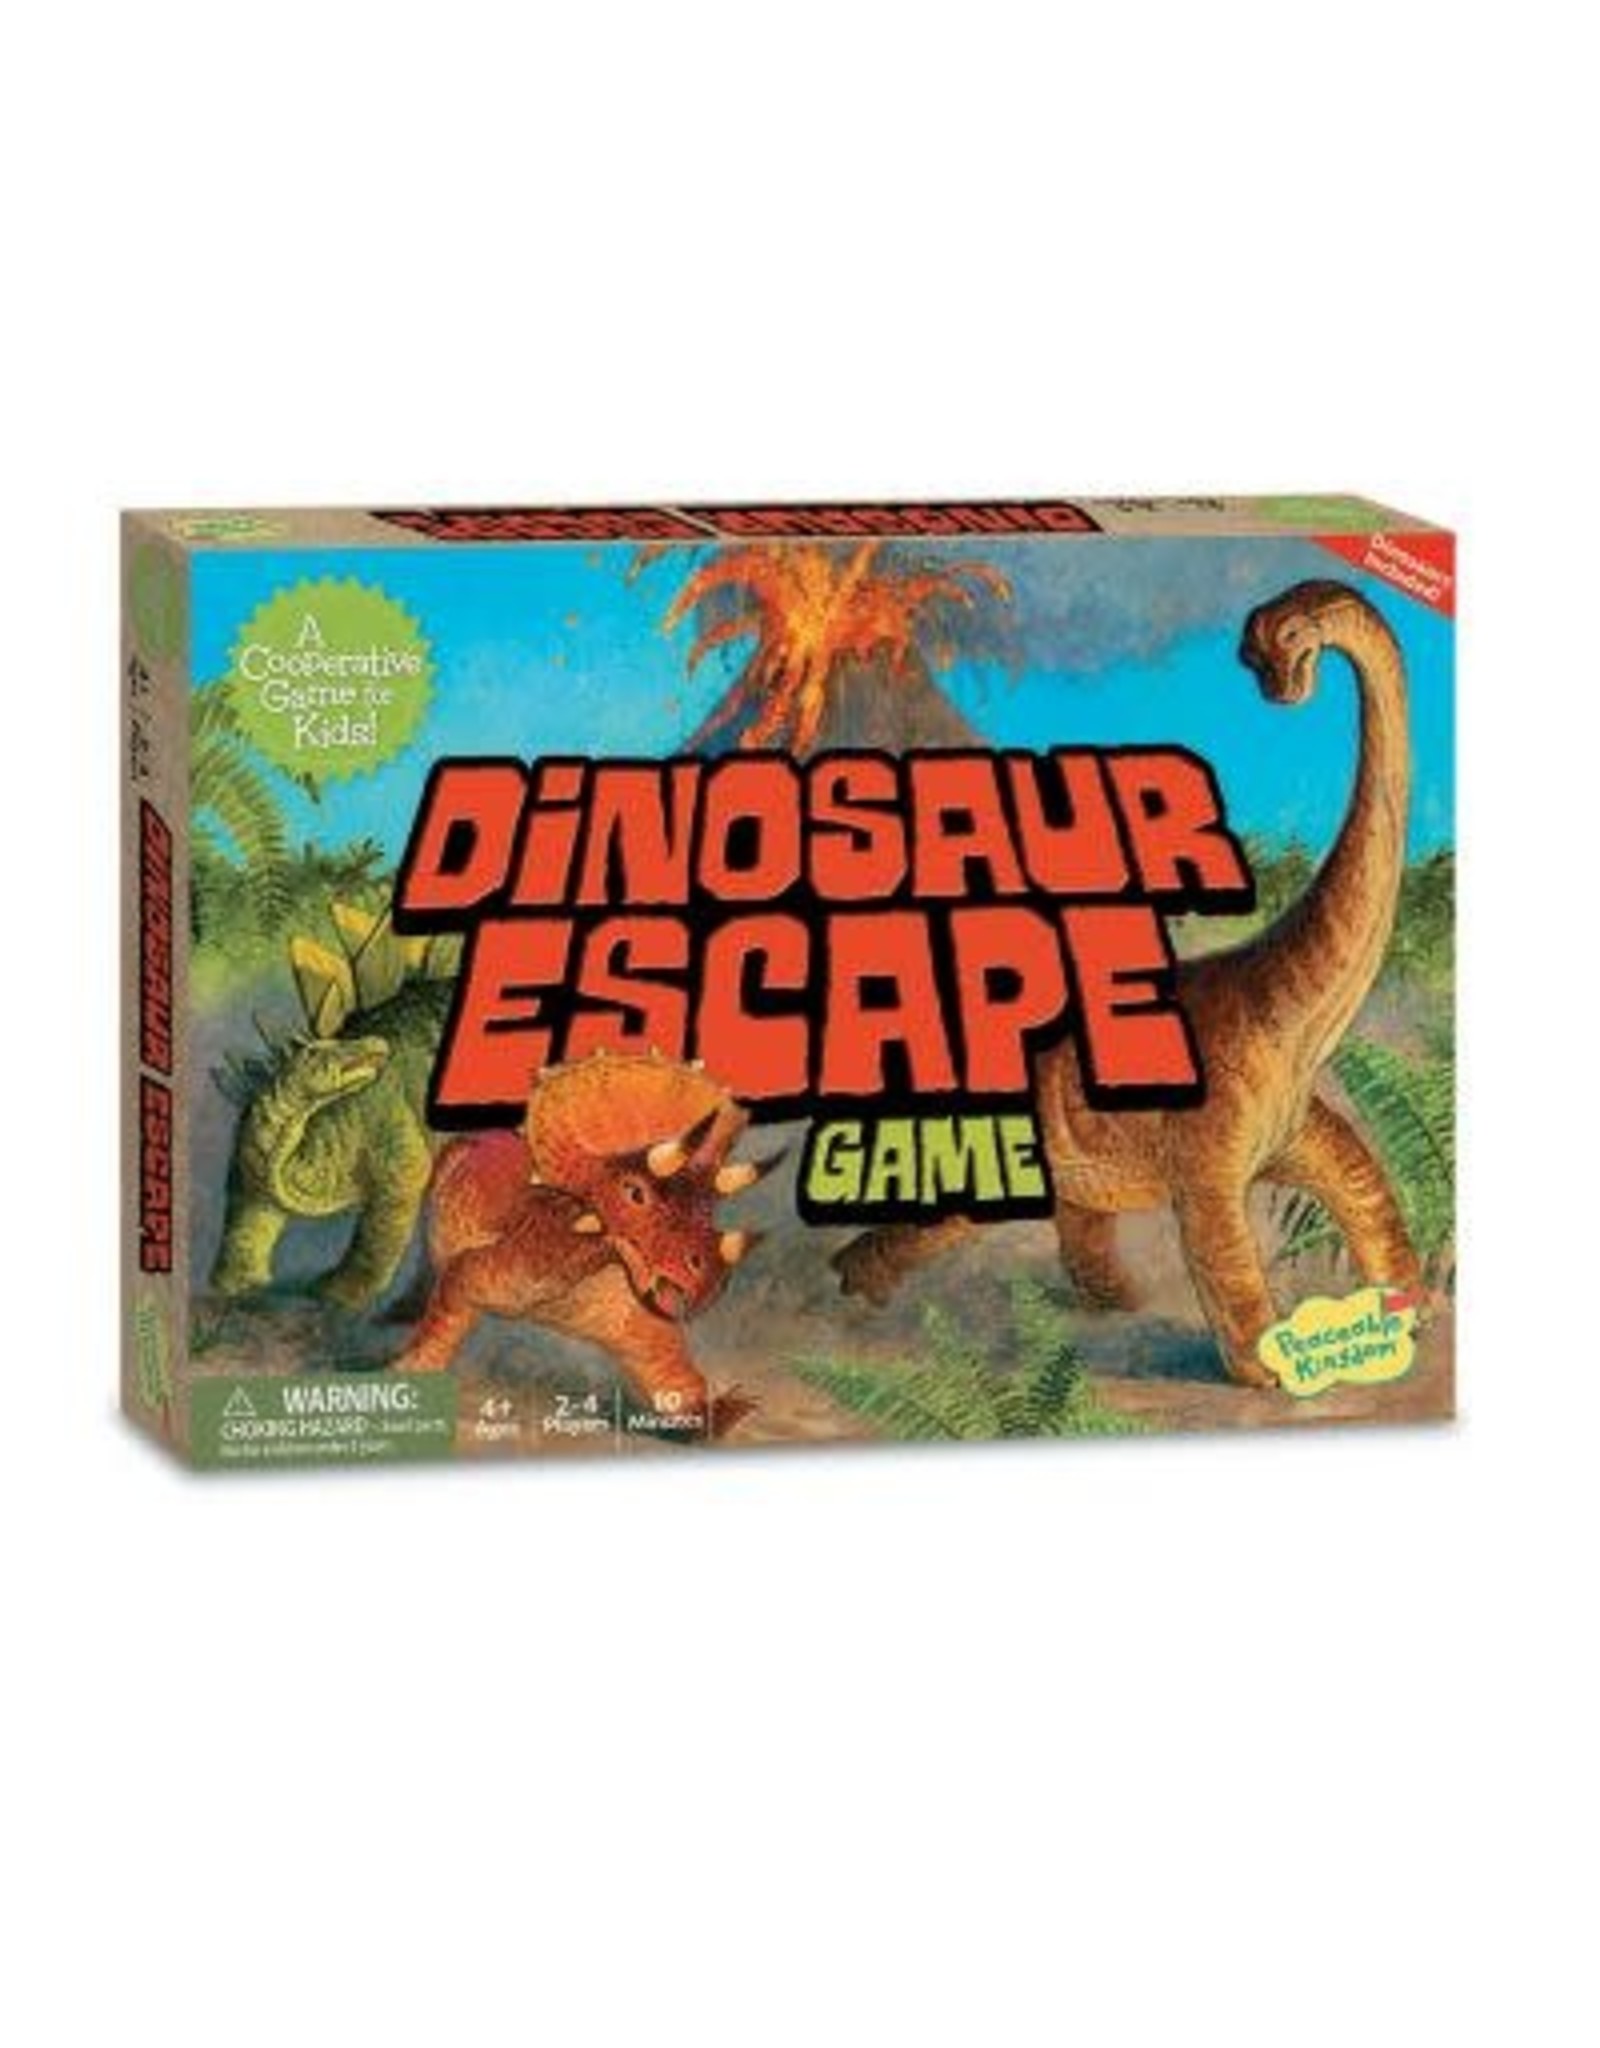 Dinosaur Escape Game